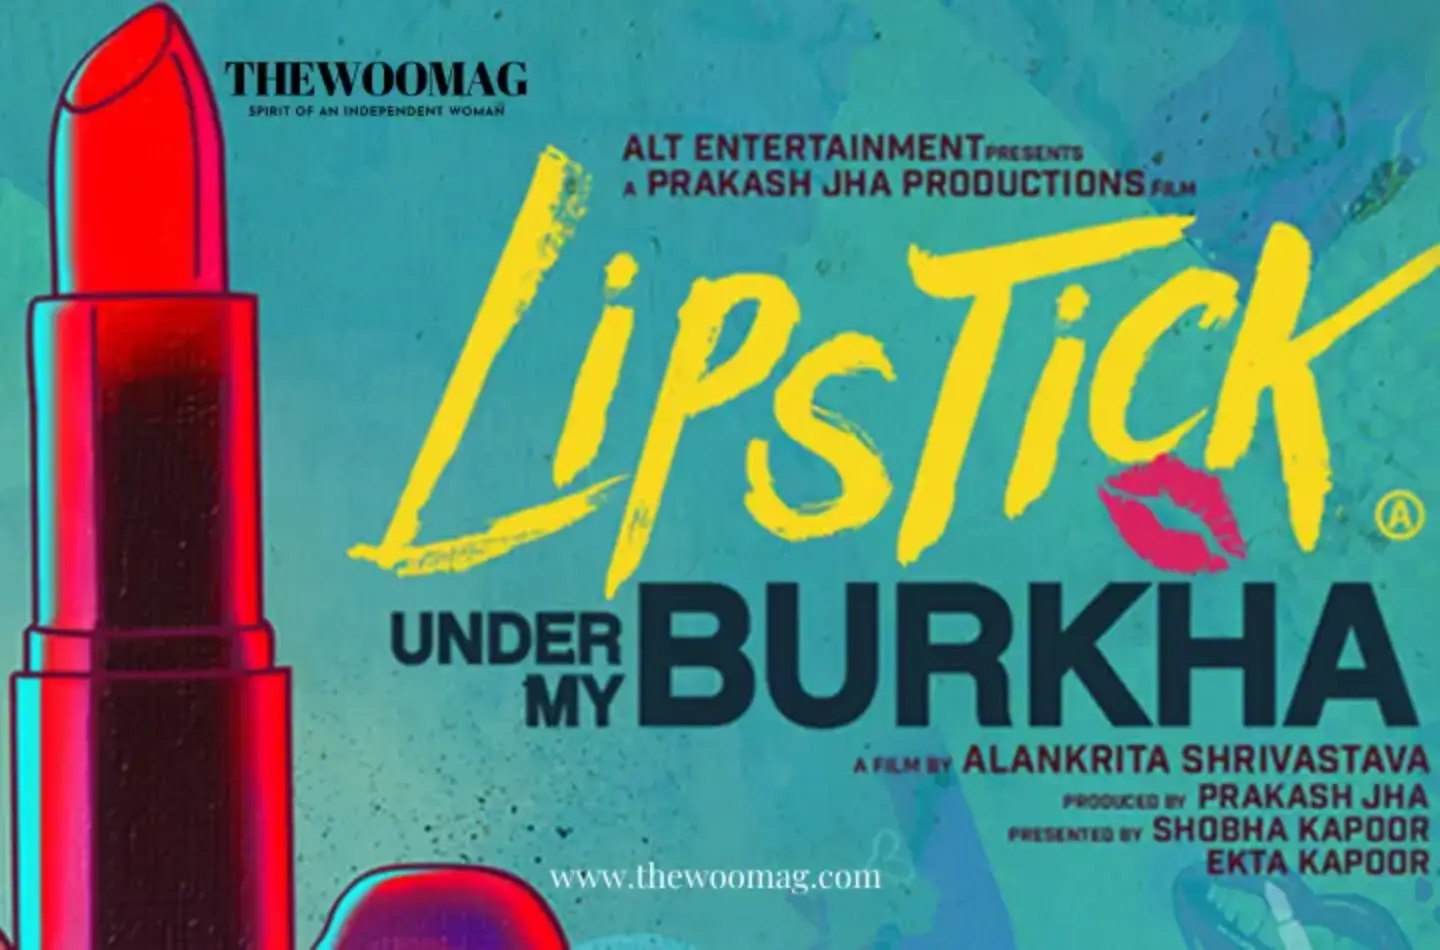 Lipstick Under My Burkha Movie Review